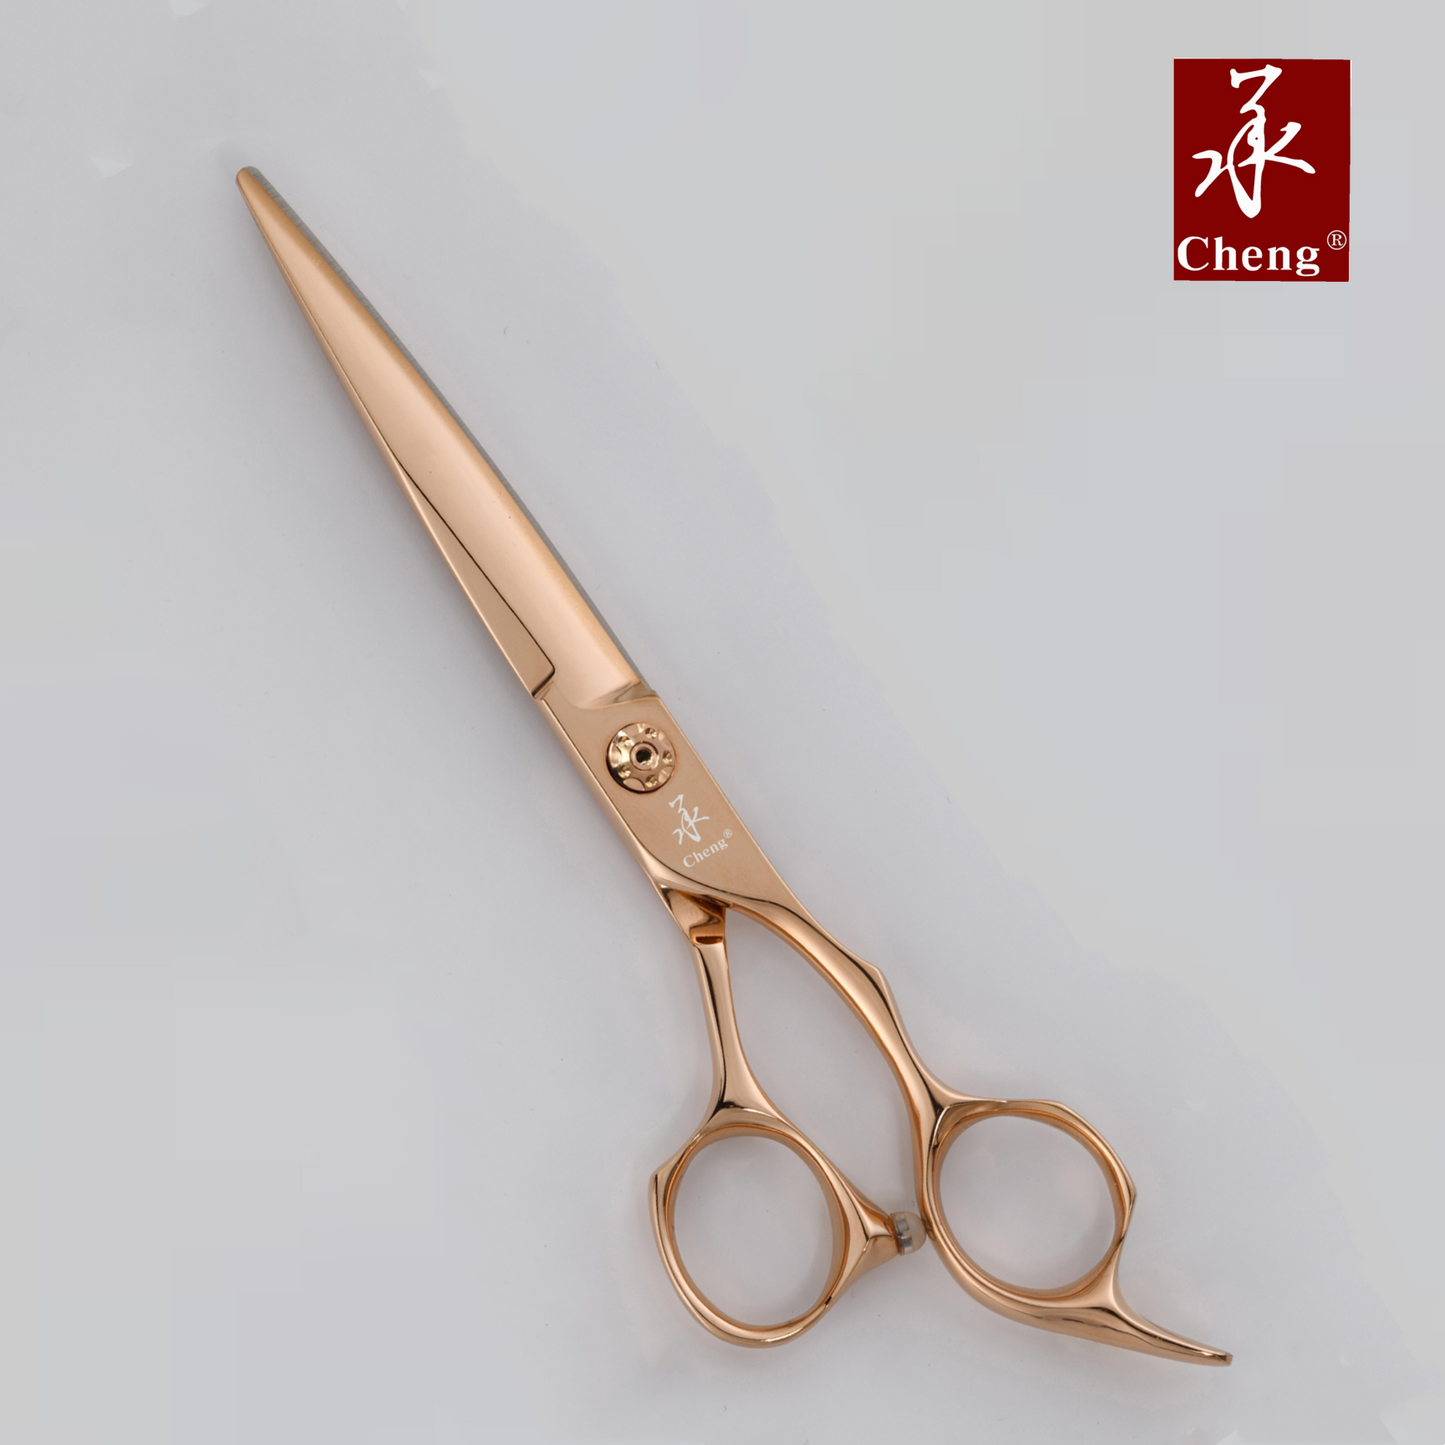 A1-6.3BK Hair Cutting Scissors 6.3 Inch